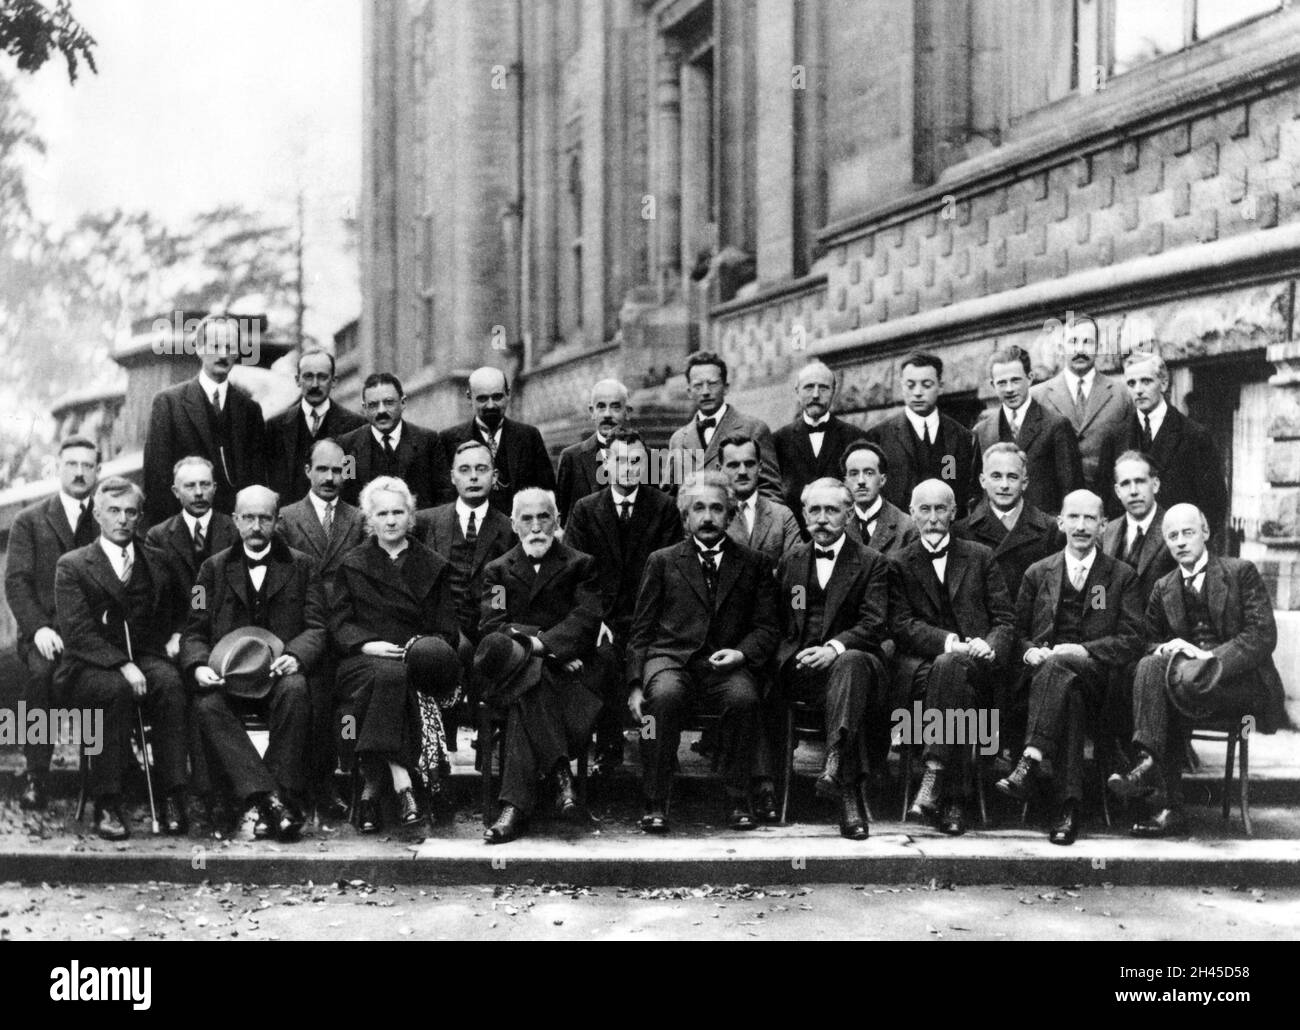 A collection of brains - delegates at the 1927 Solvay Conference. Those  present are Back Row: Auguste Piccard, Émile Henriot, Paul Ehrenfest,  Édouard Herzen, Théophile de Donder, Erwin Schrödinger, JE Verschaffelt,  Wolfgang